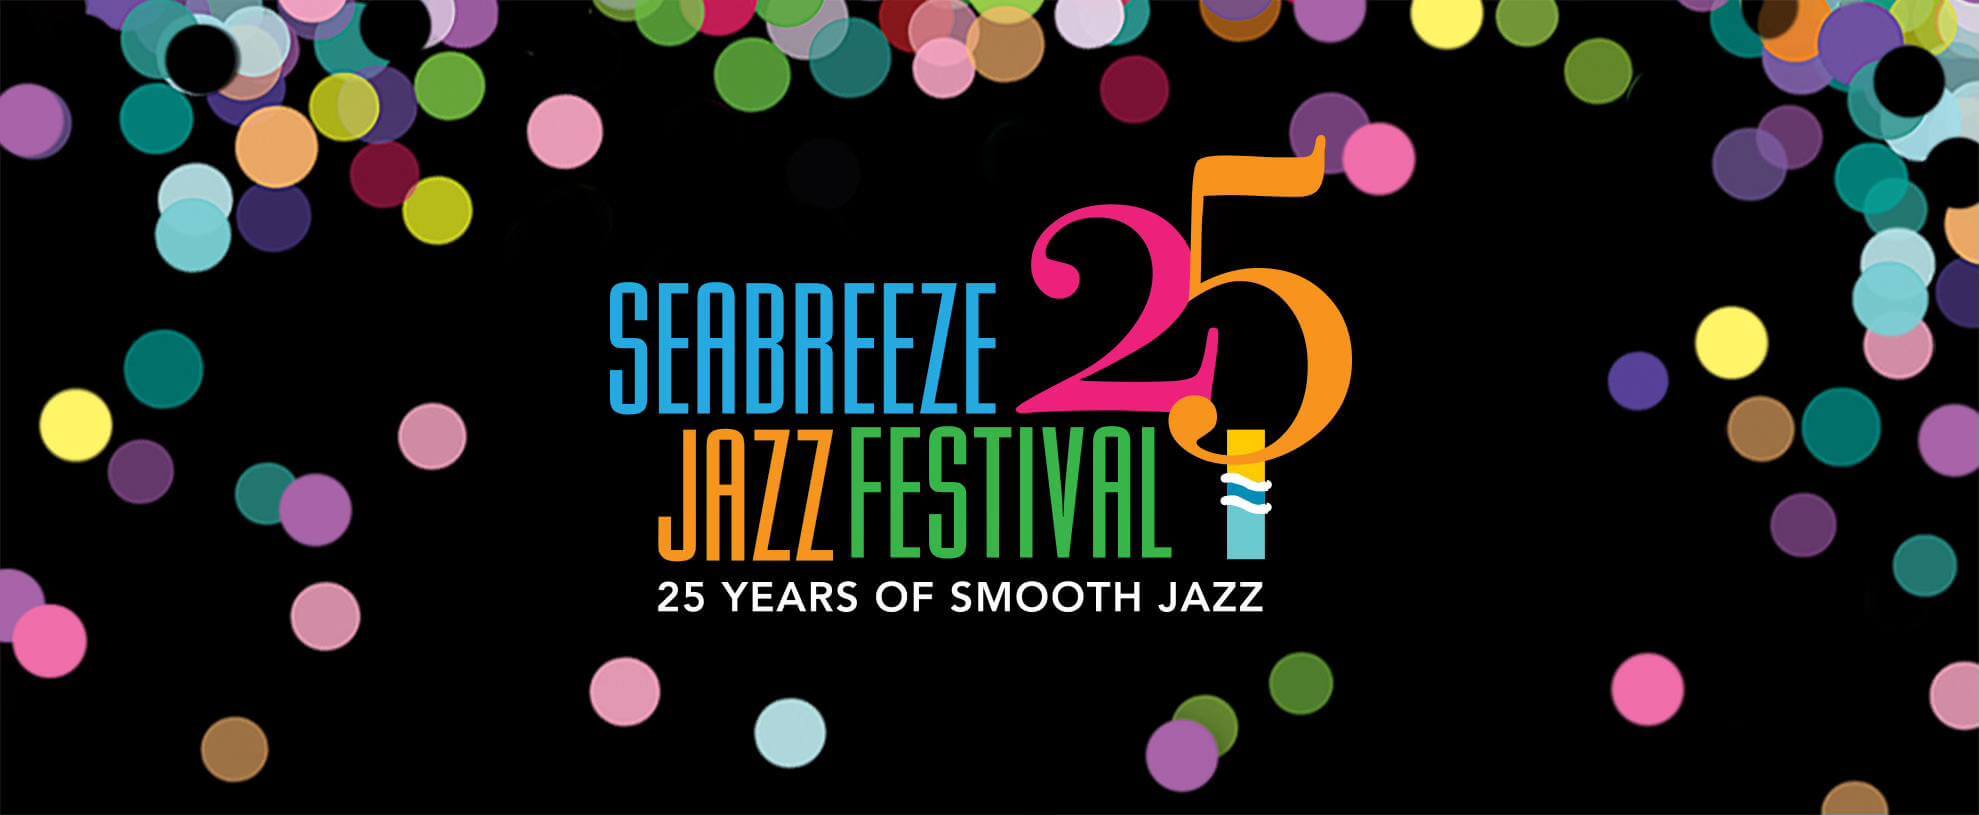 Seabreeze Jazz Festival Promotional flyer